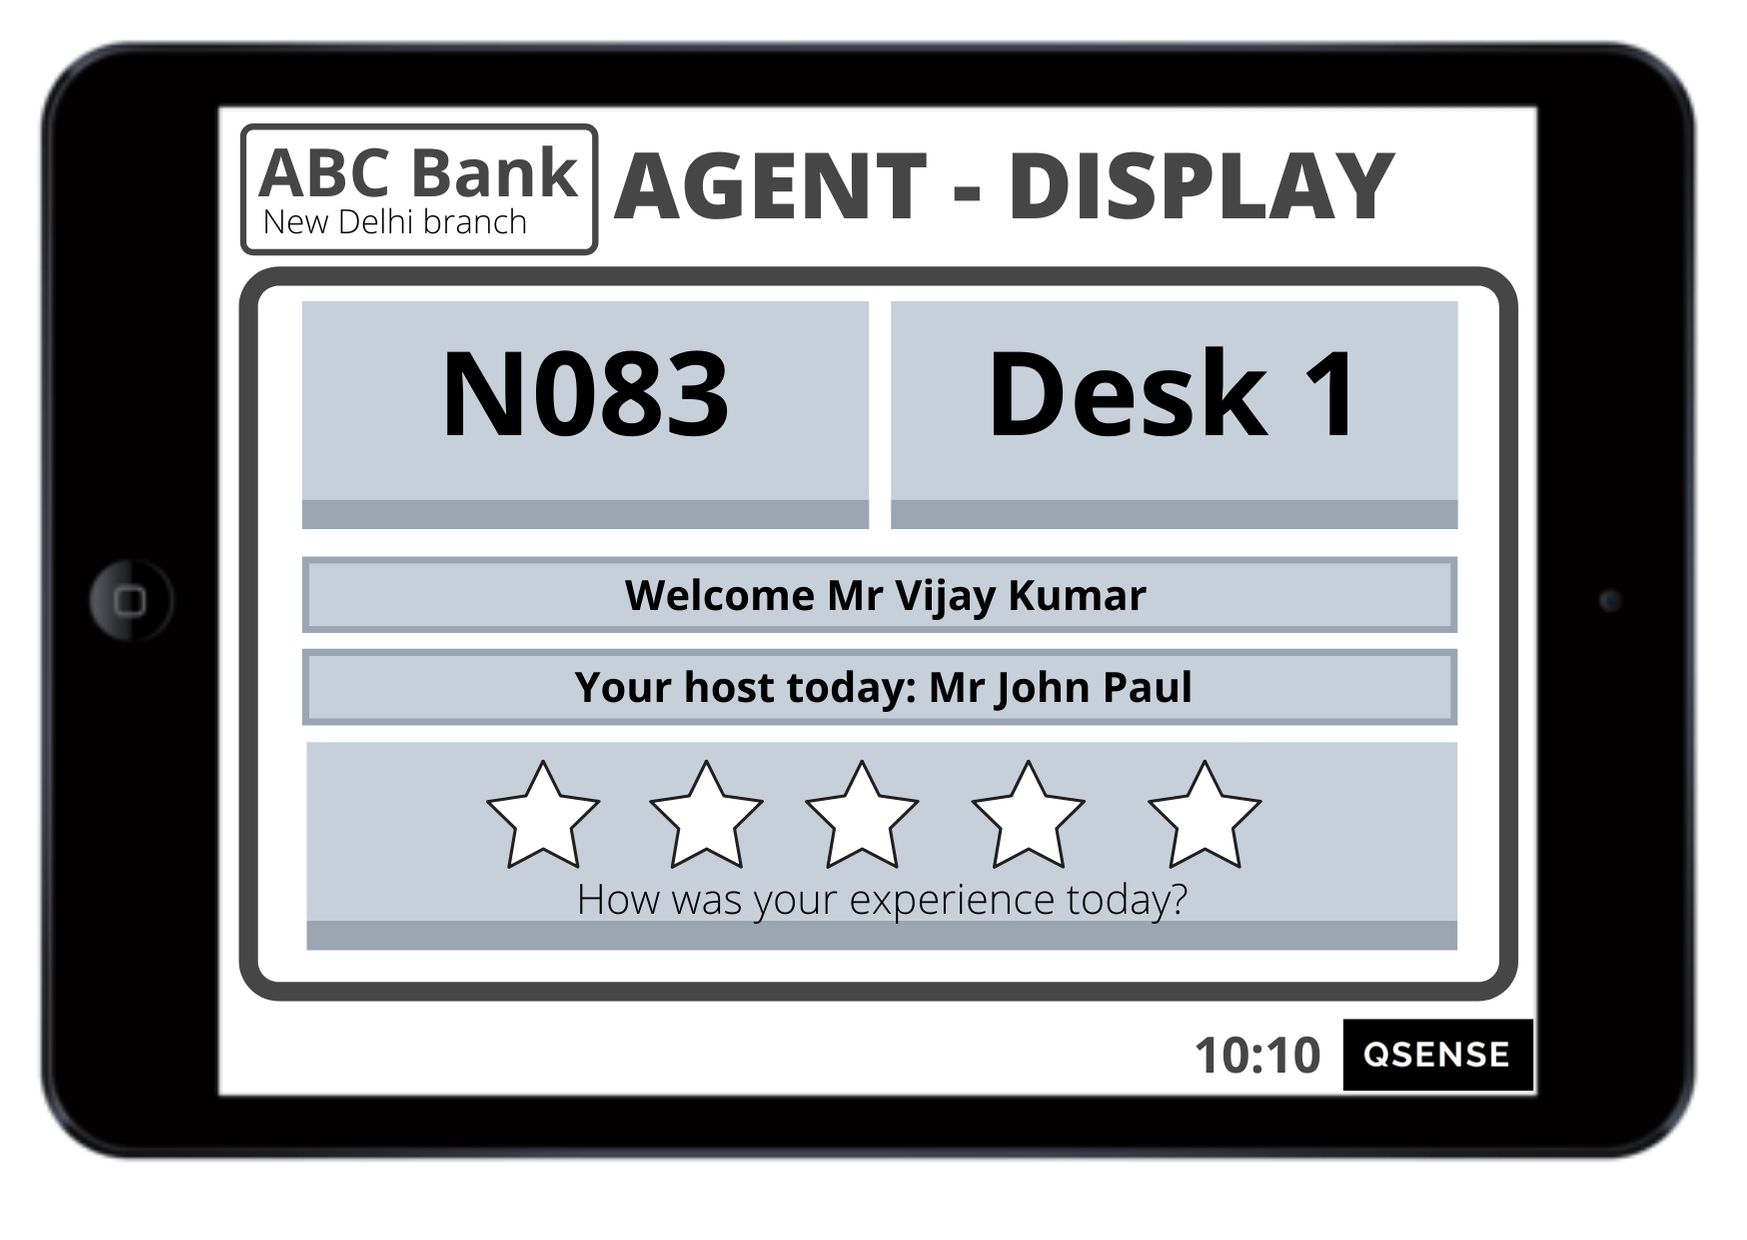 Service desk agent display unit